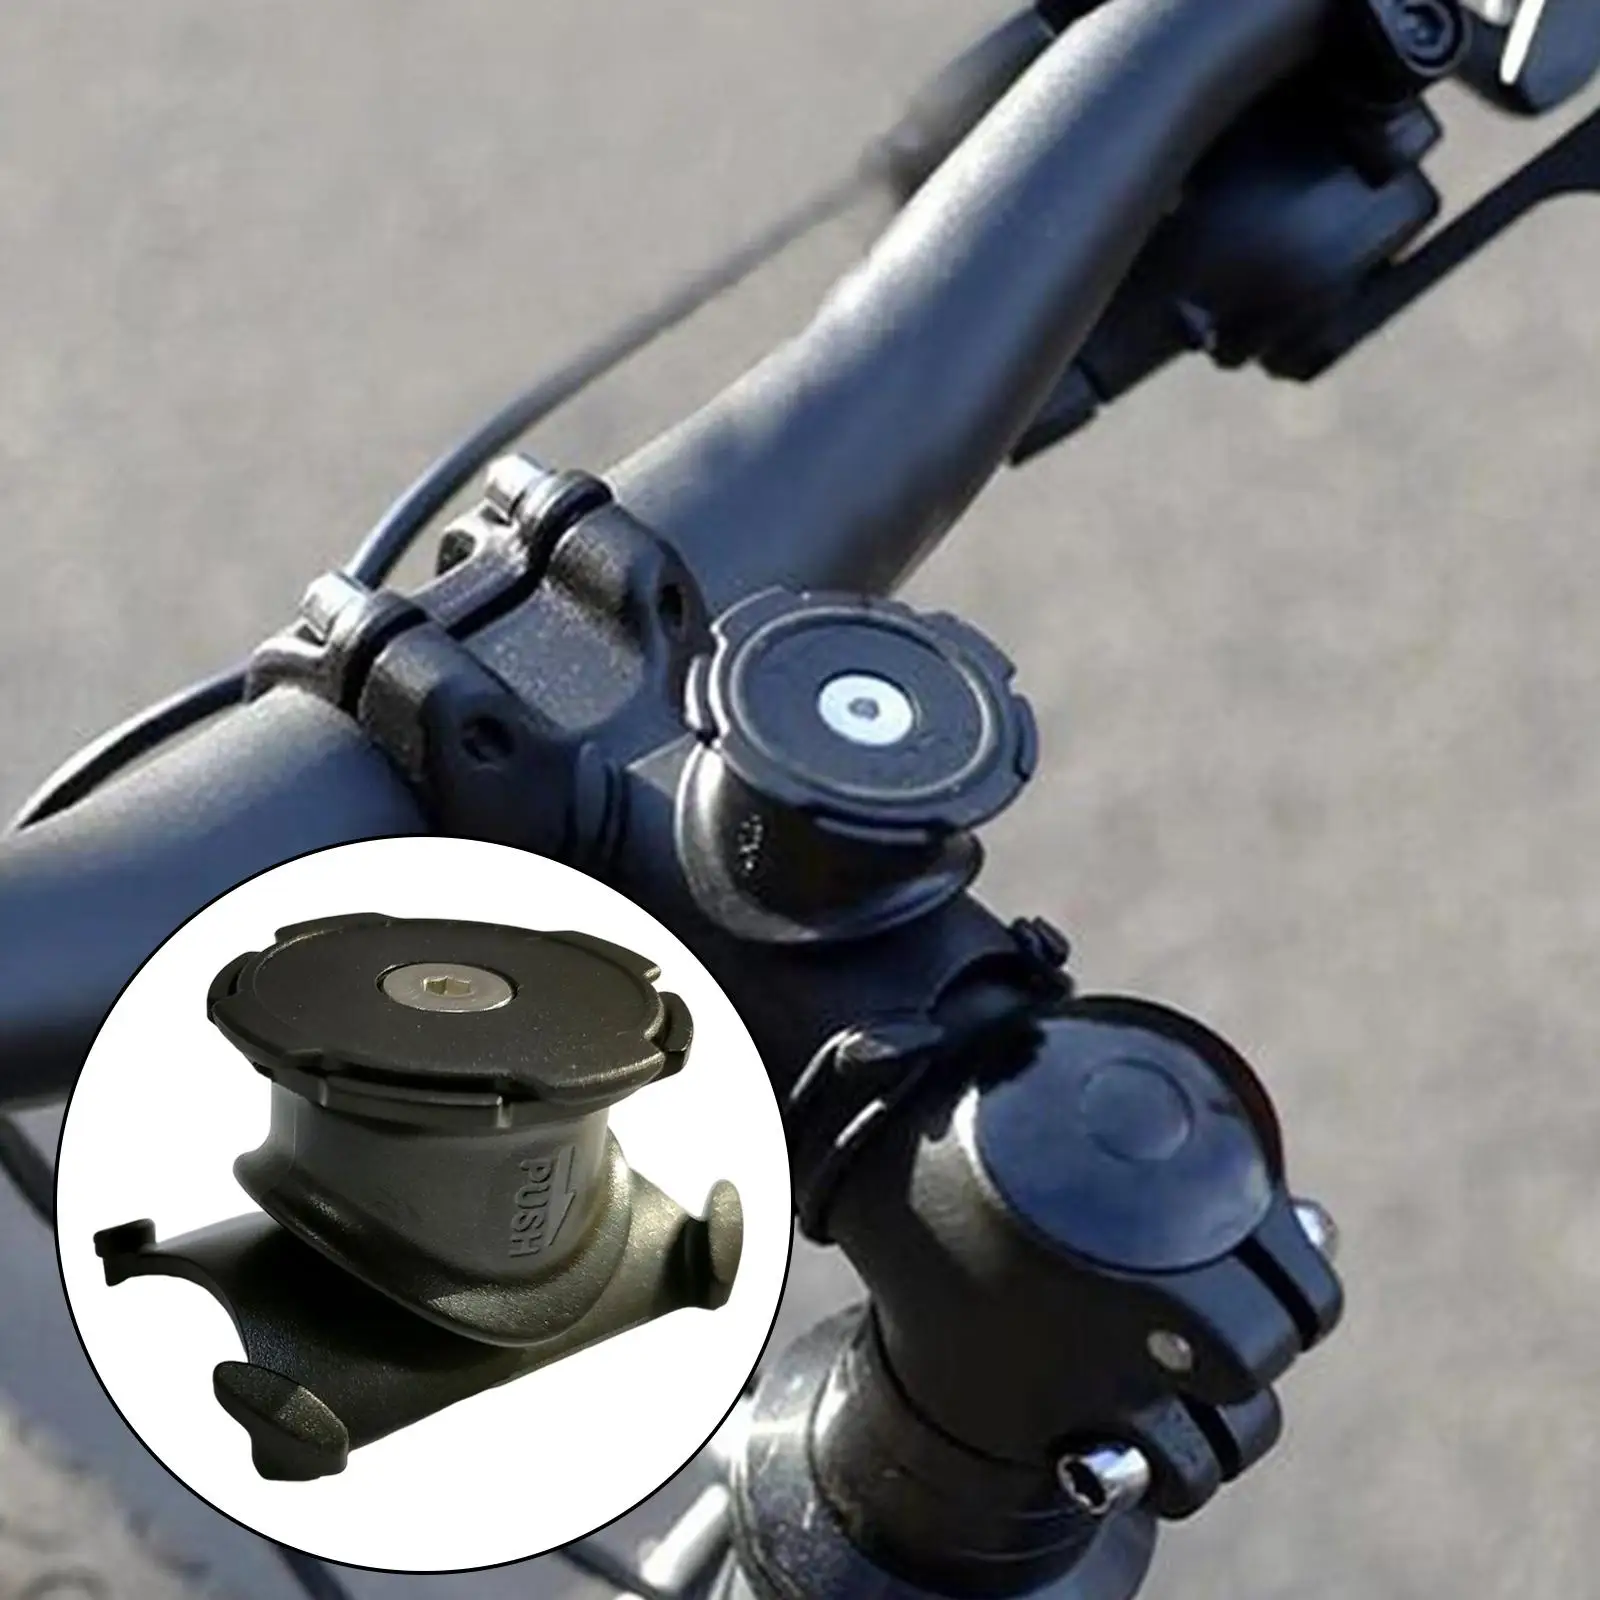 Motobike Bicycle Handlebar Stem Phone Holder Universal Support Riding Bike Mount Supplies Replacement High Performance Premium